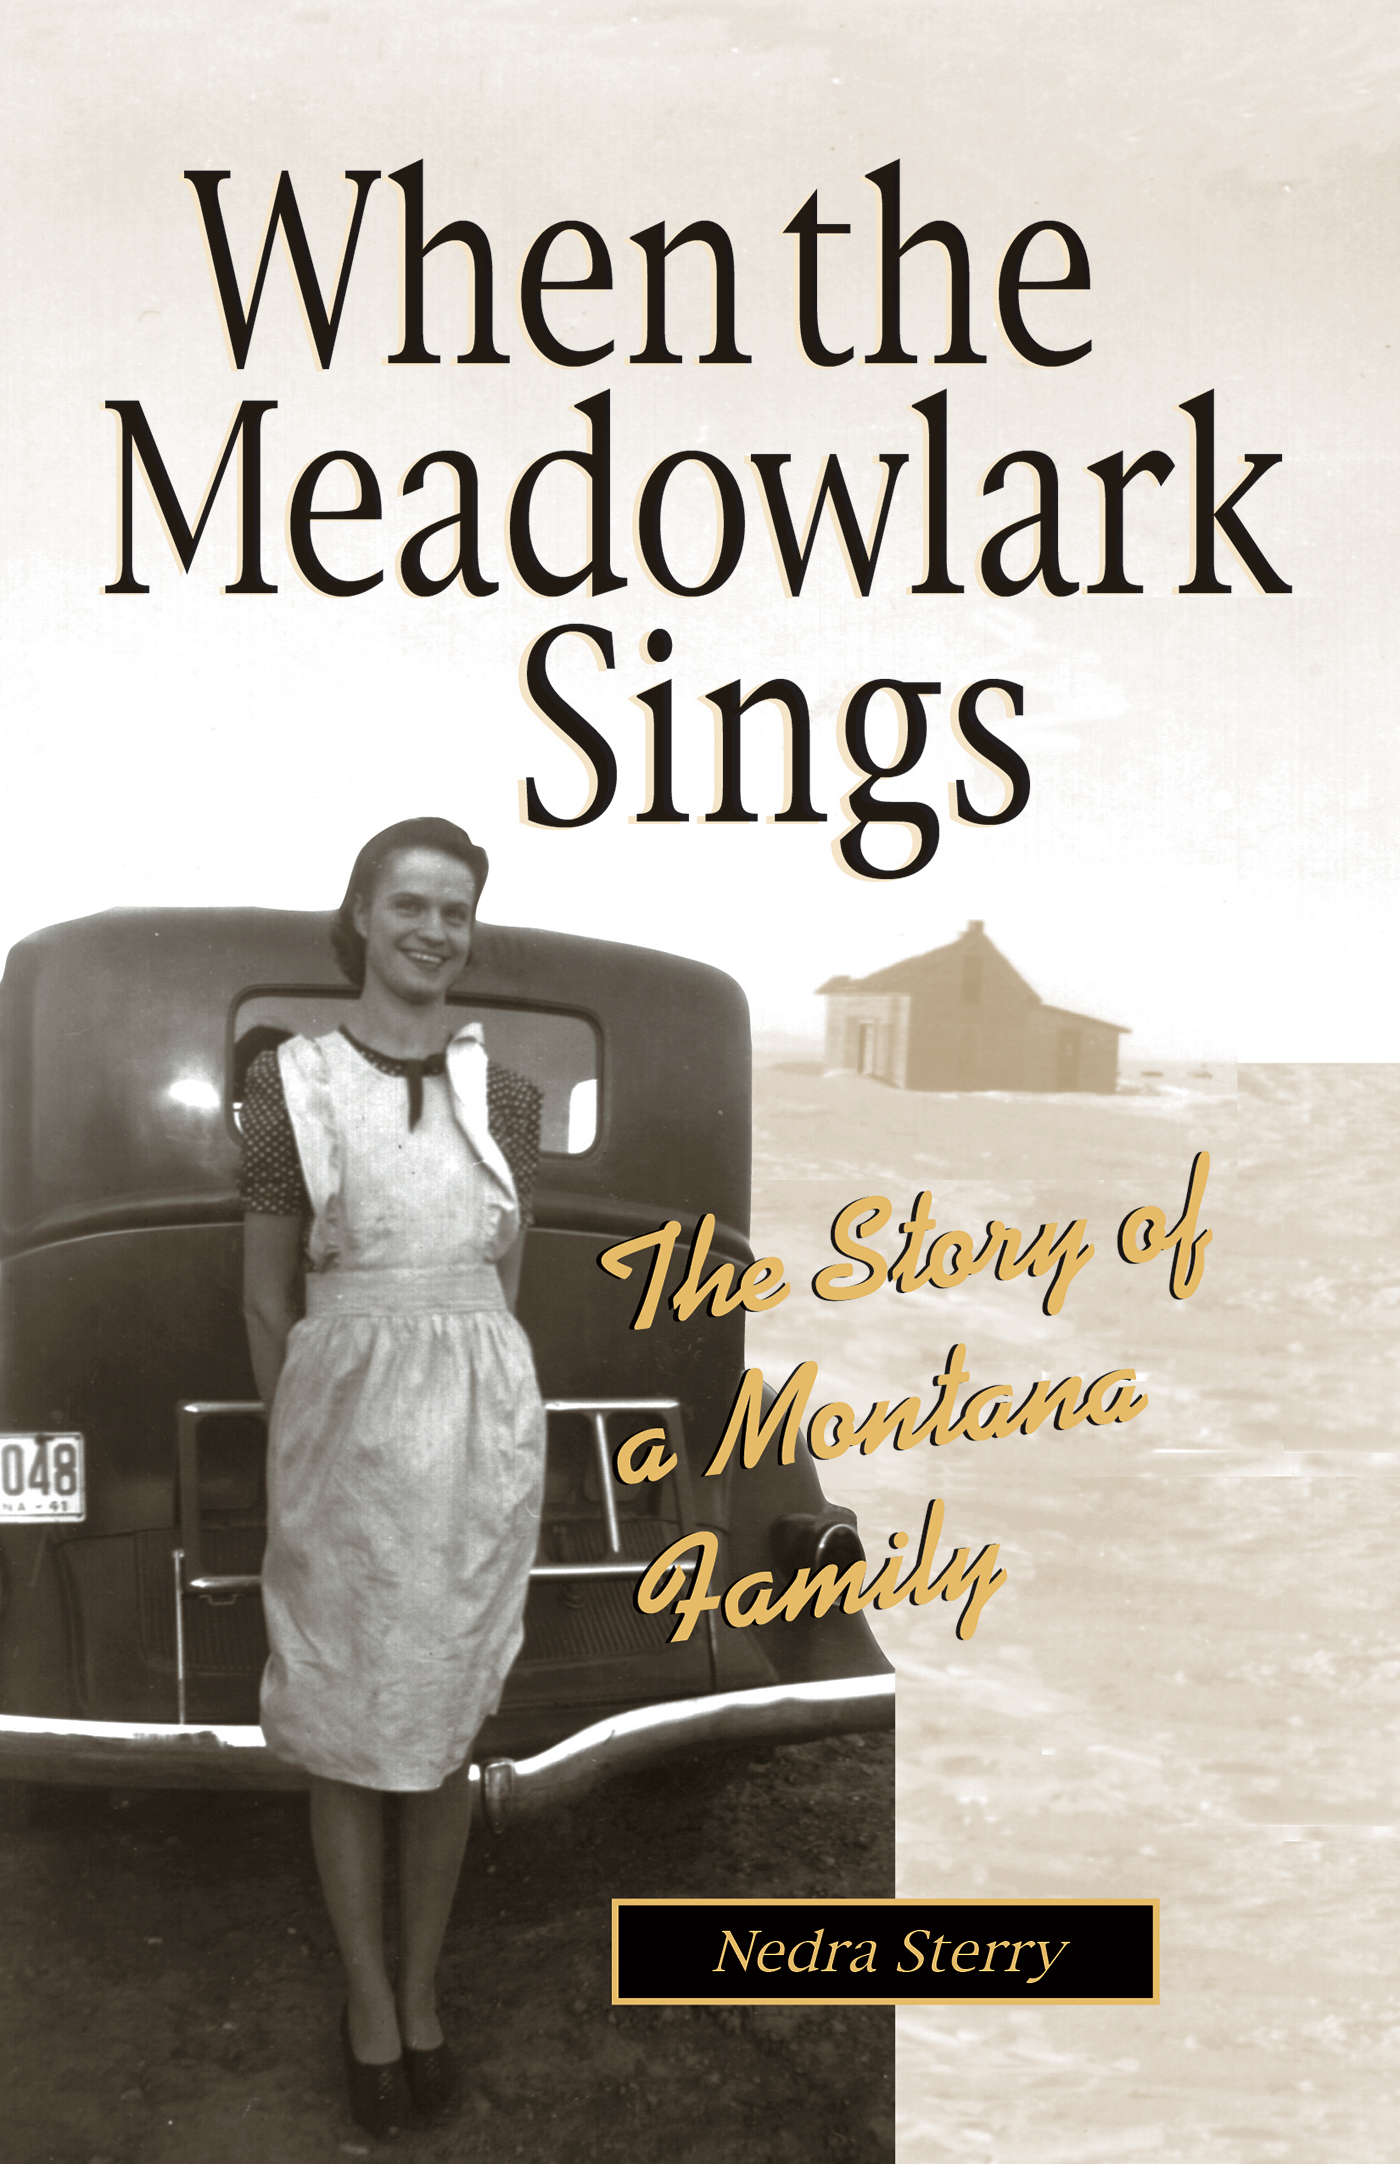 When-the-Meadowlark-Sings-A-Montana-Memoir